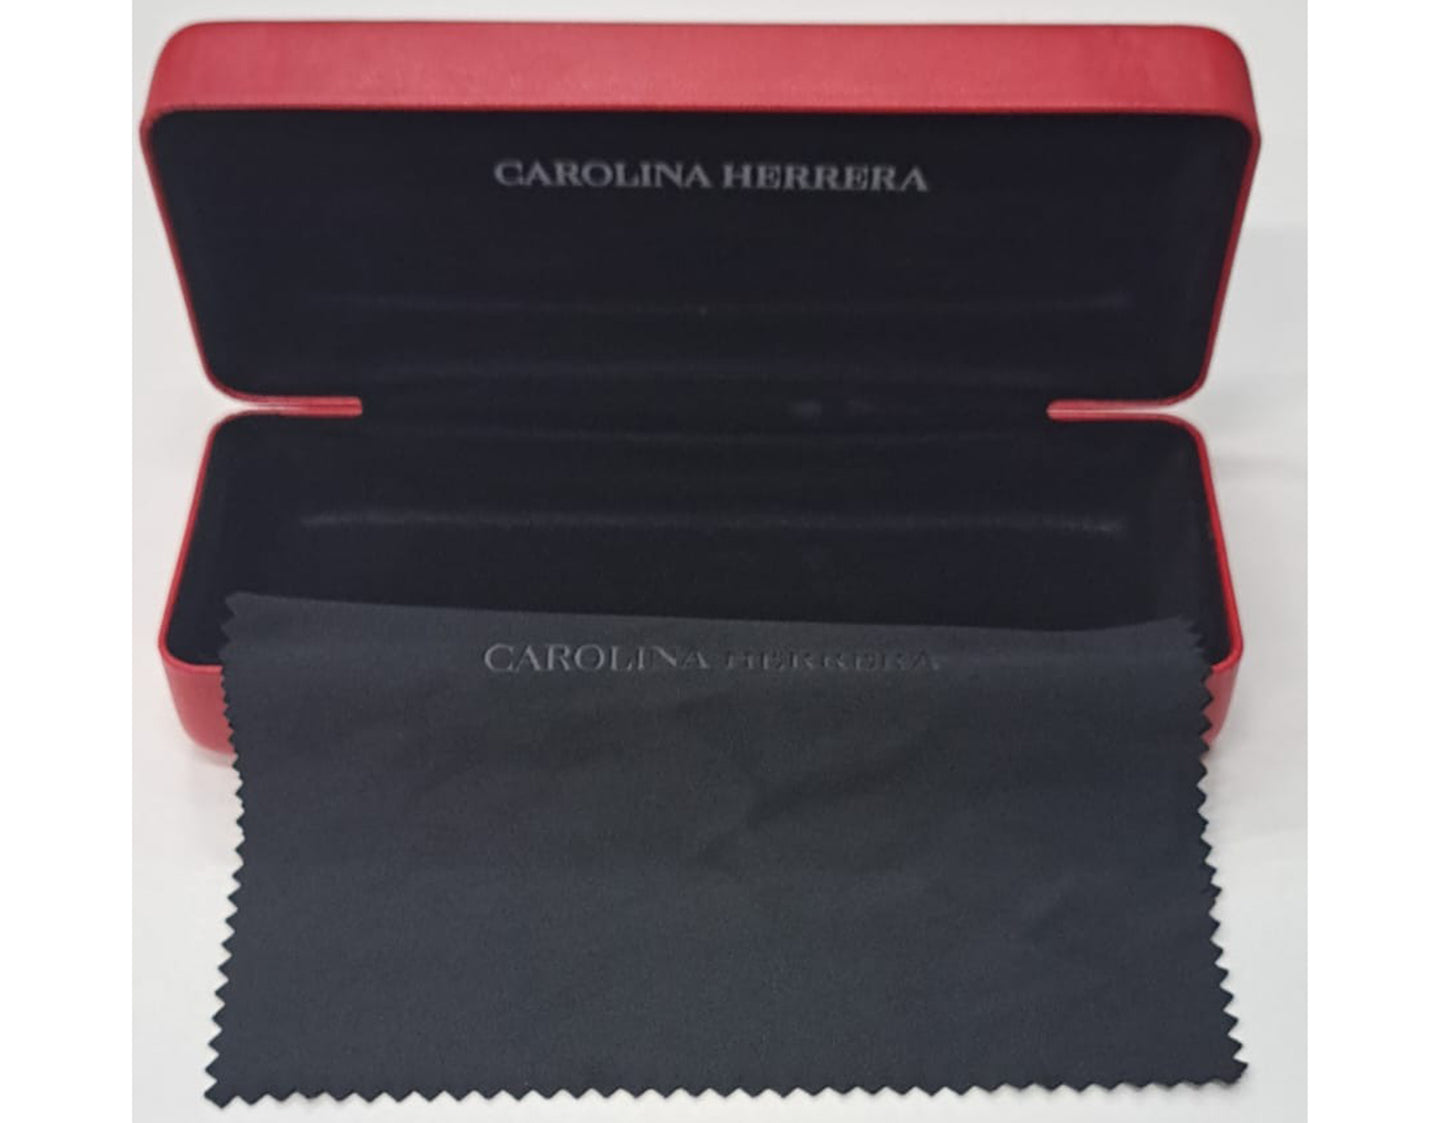 Carolina Herrera VHE717K-0844 54mm New Eyeglasses